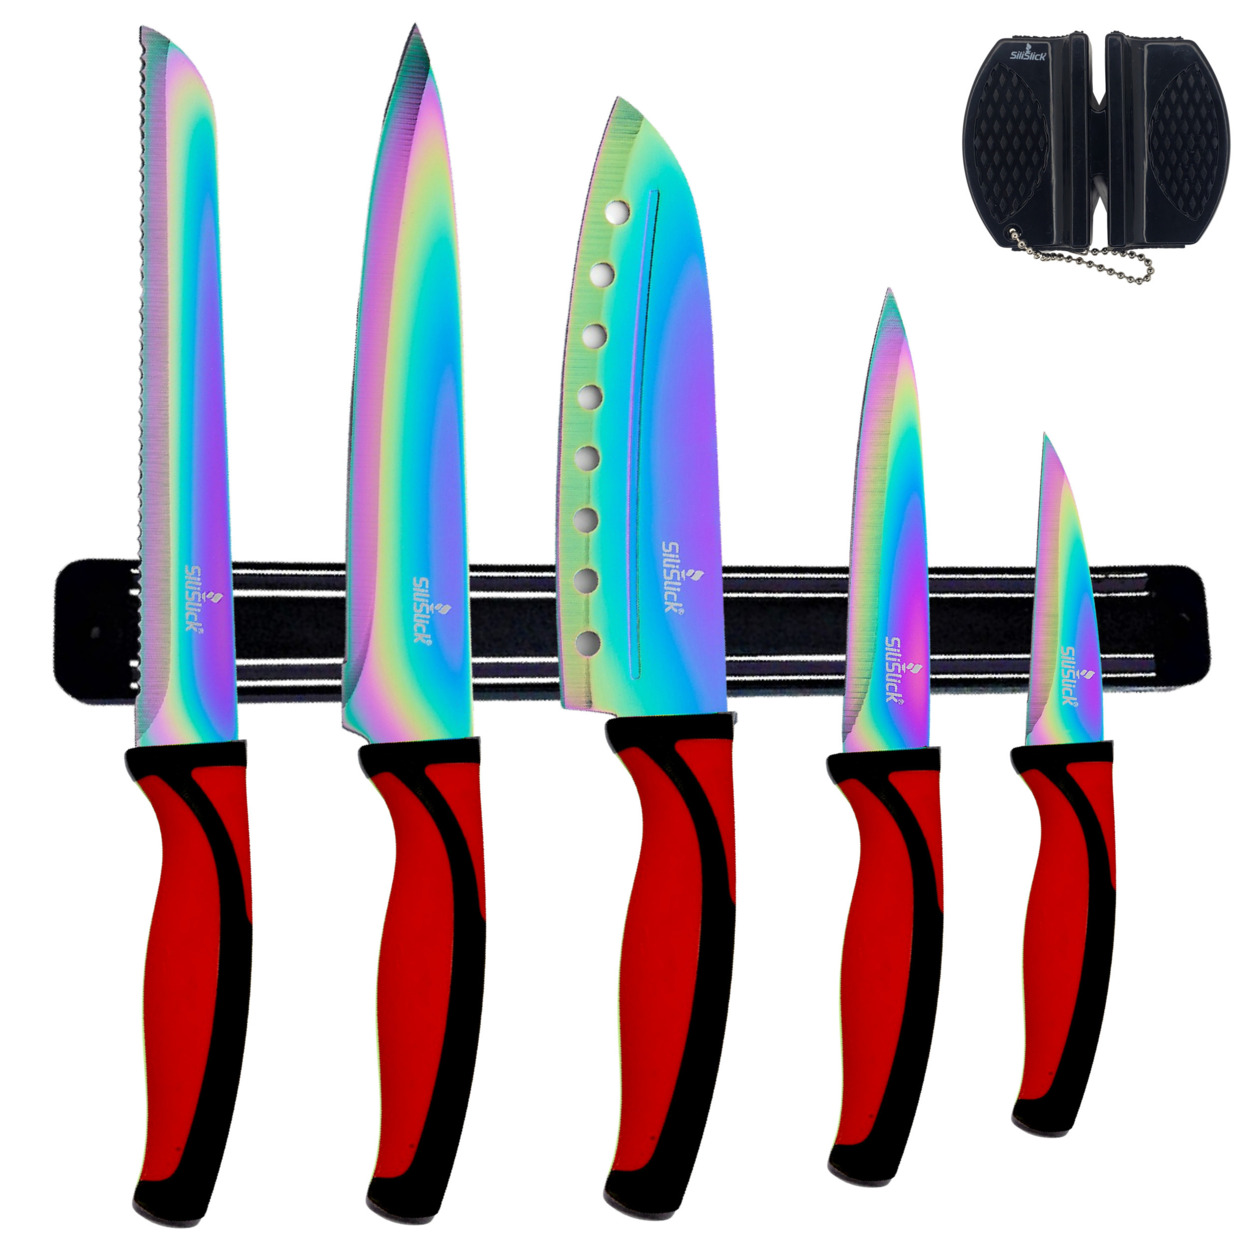 SiliSlick Stainless Steel Blue Handle Knife Set - Titanium Coated Utility Knife, Santoku, Bread, Chef, & Paring + Sharpener & Mounting Rack